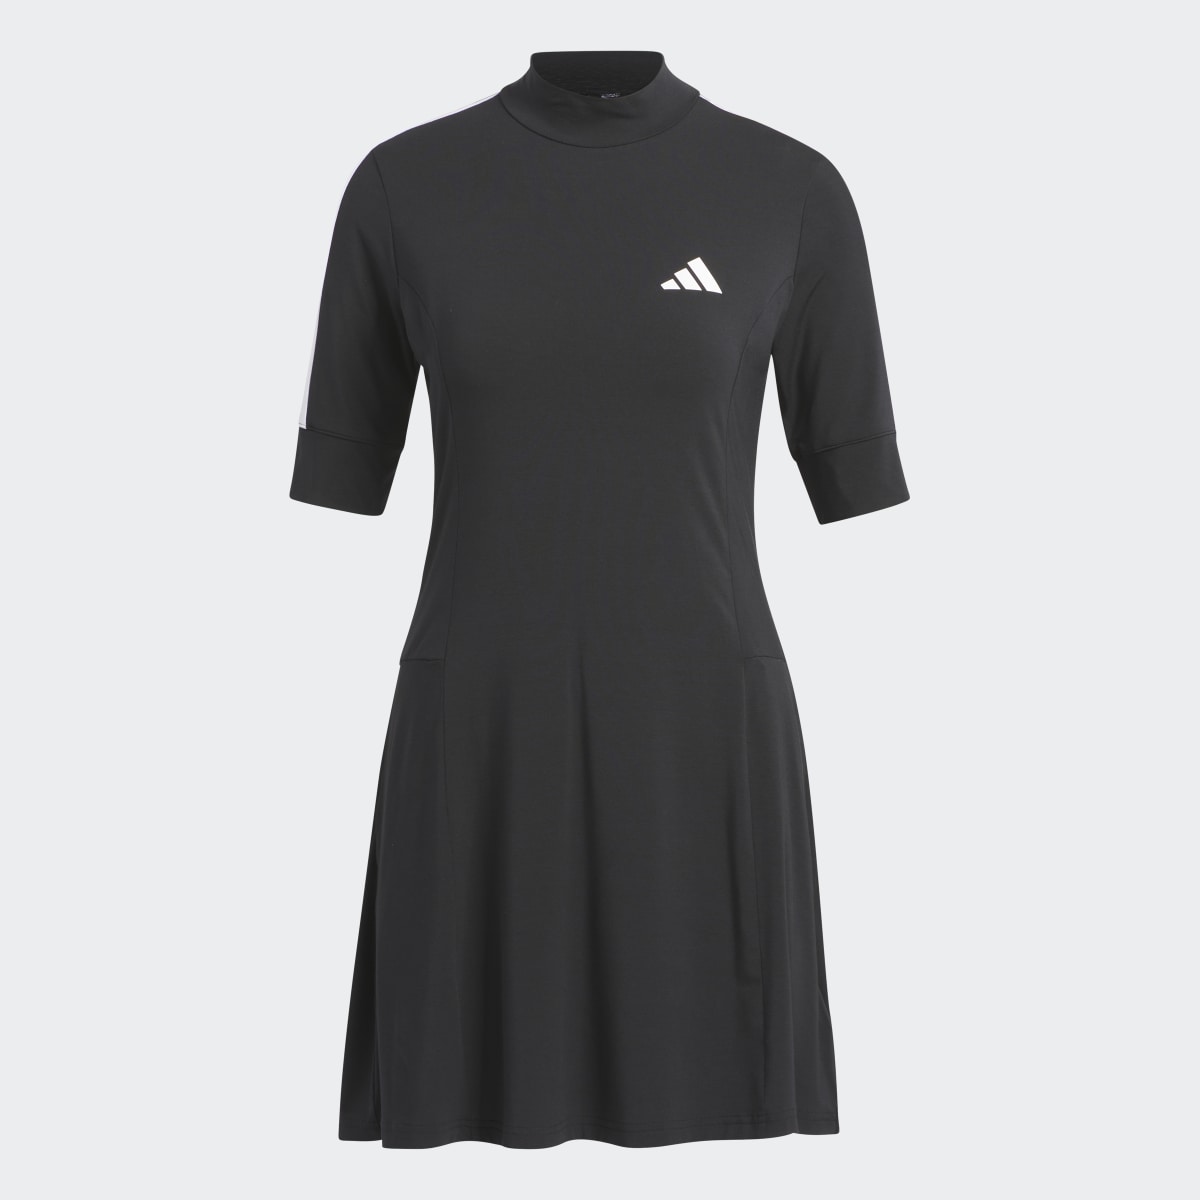 Adidas Made With Nature Golf Dress. 9